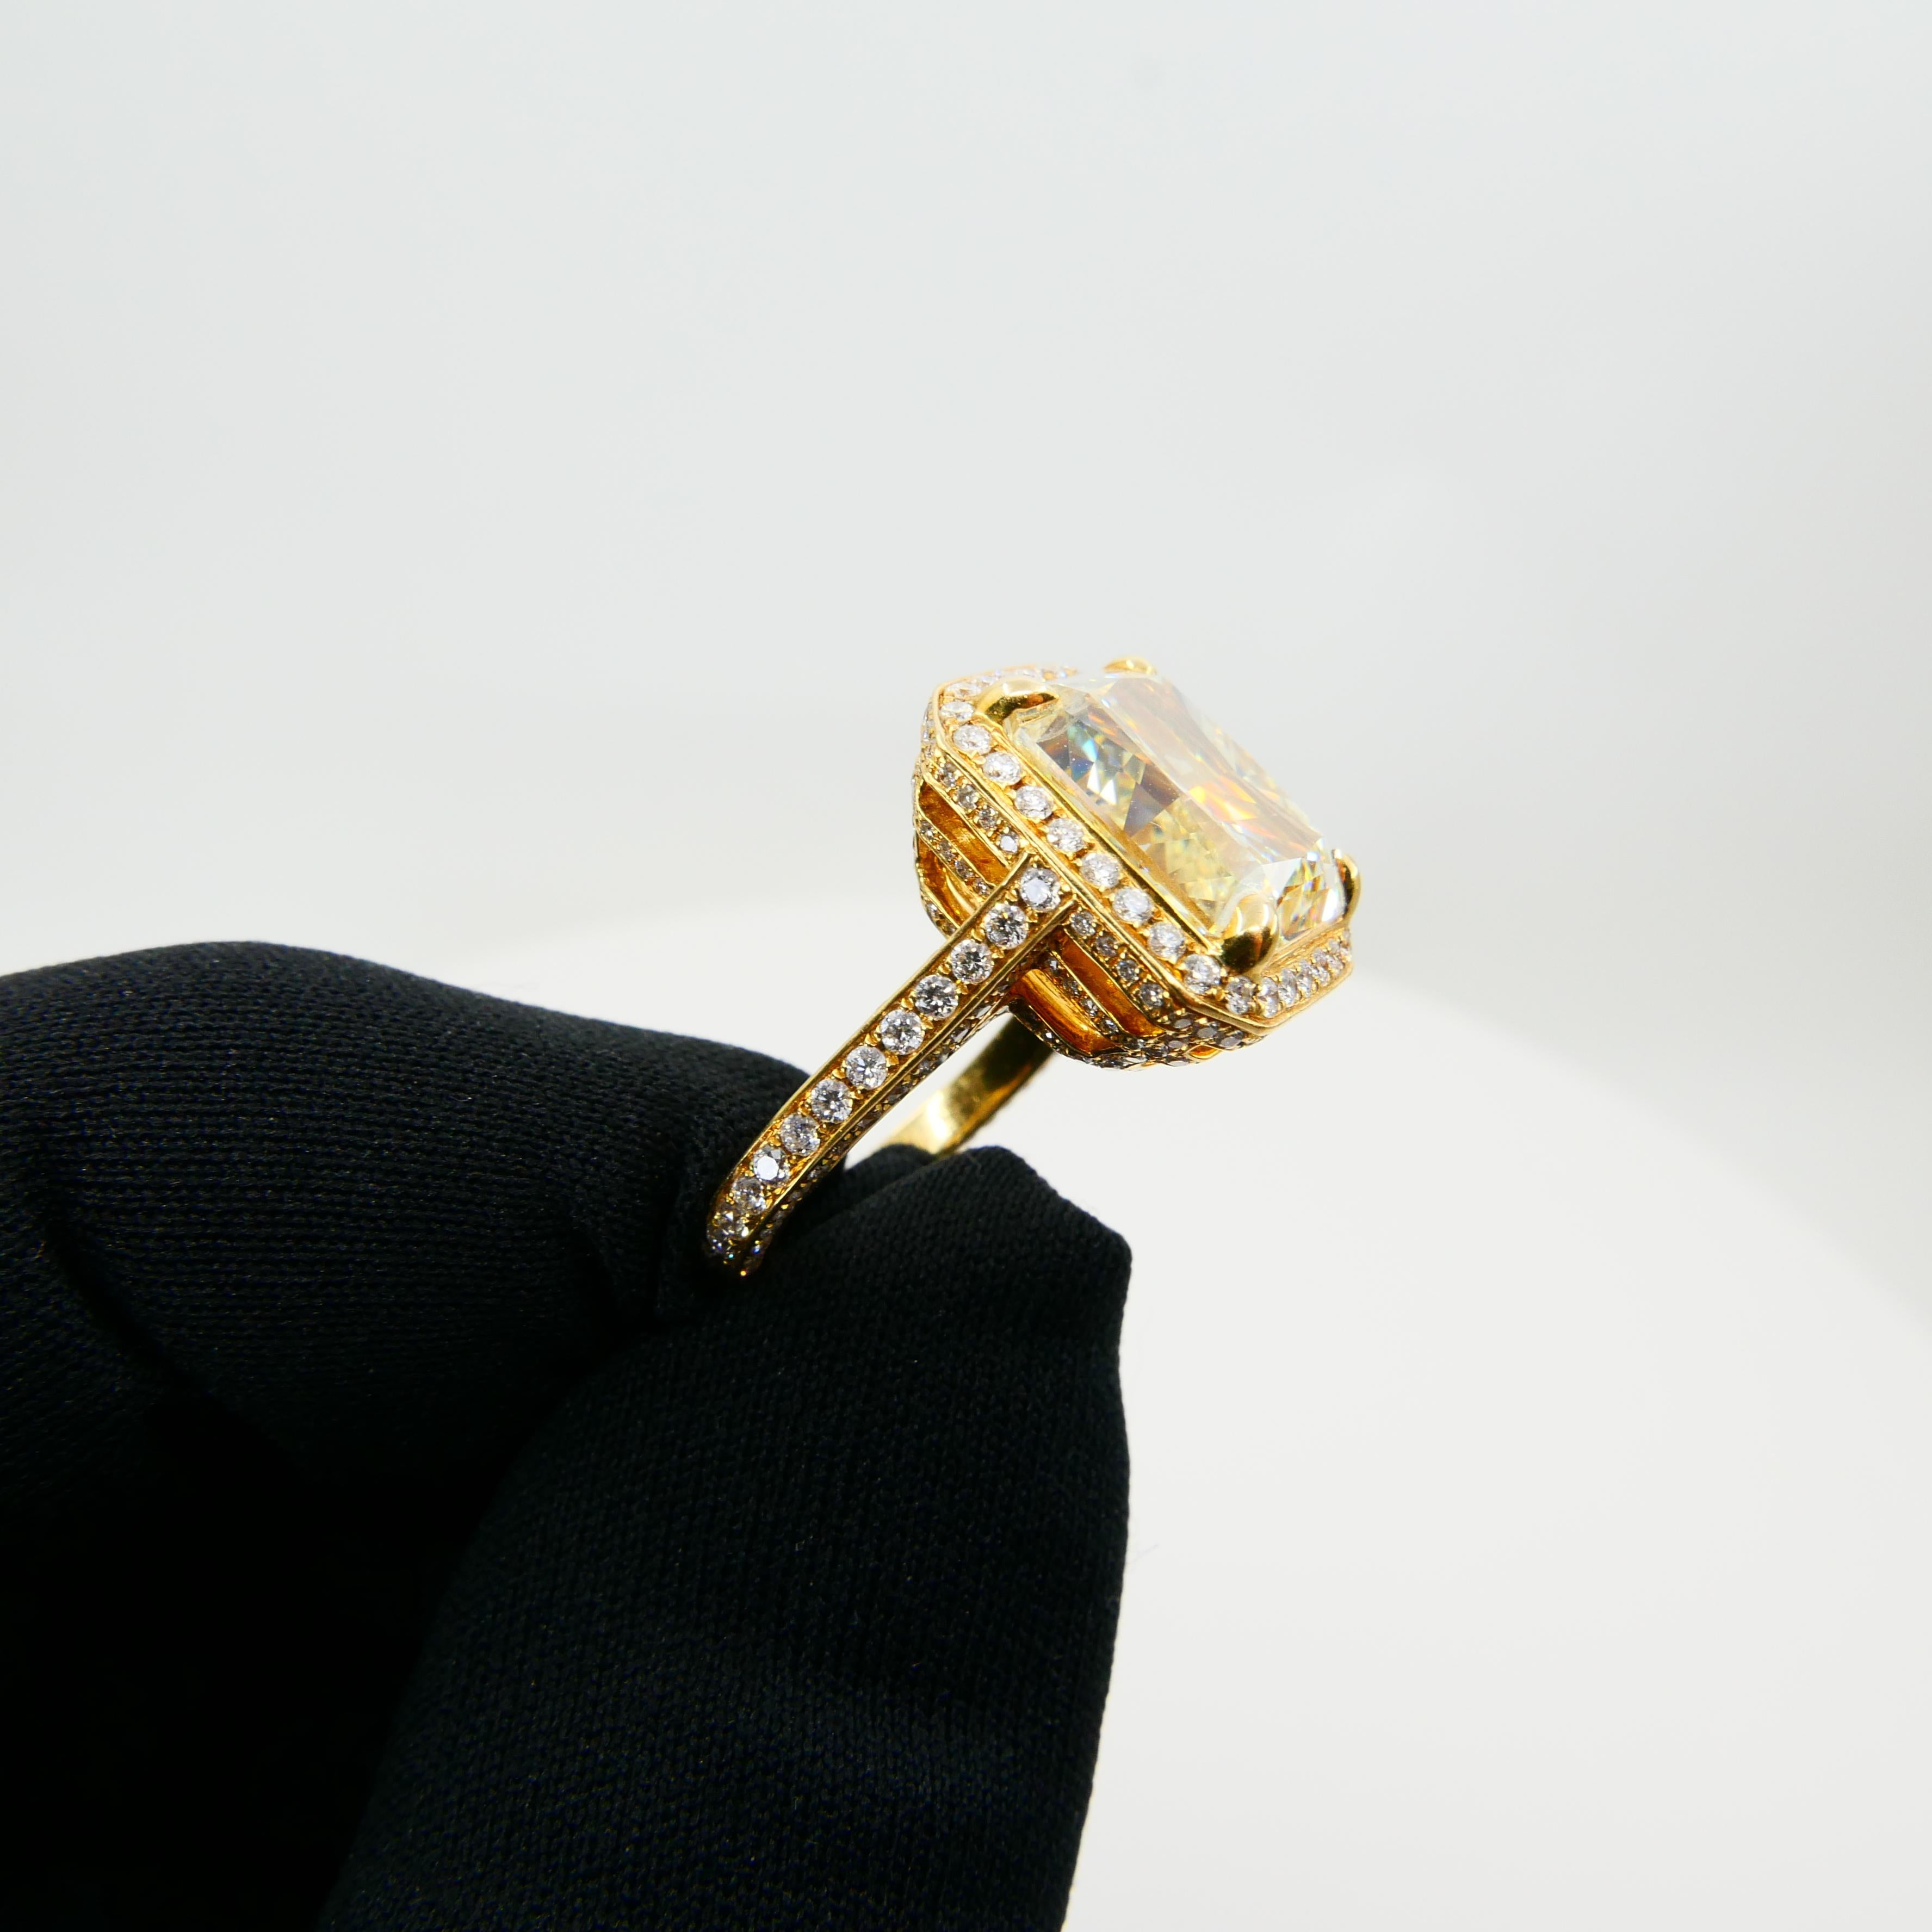 GIA Certified 9 Carat Yellow Diamond Engagement Ring, Oversized & Eye Clean 2